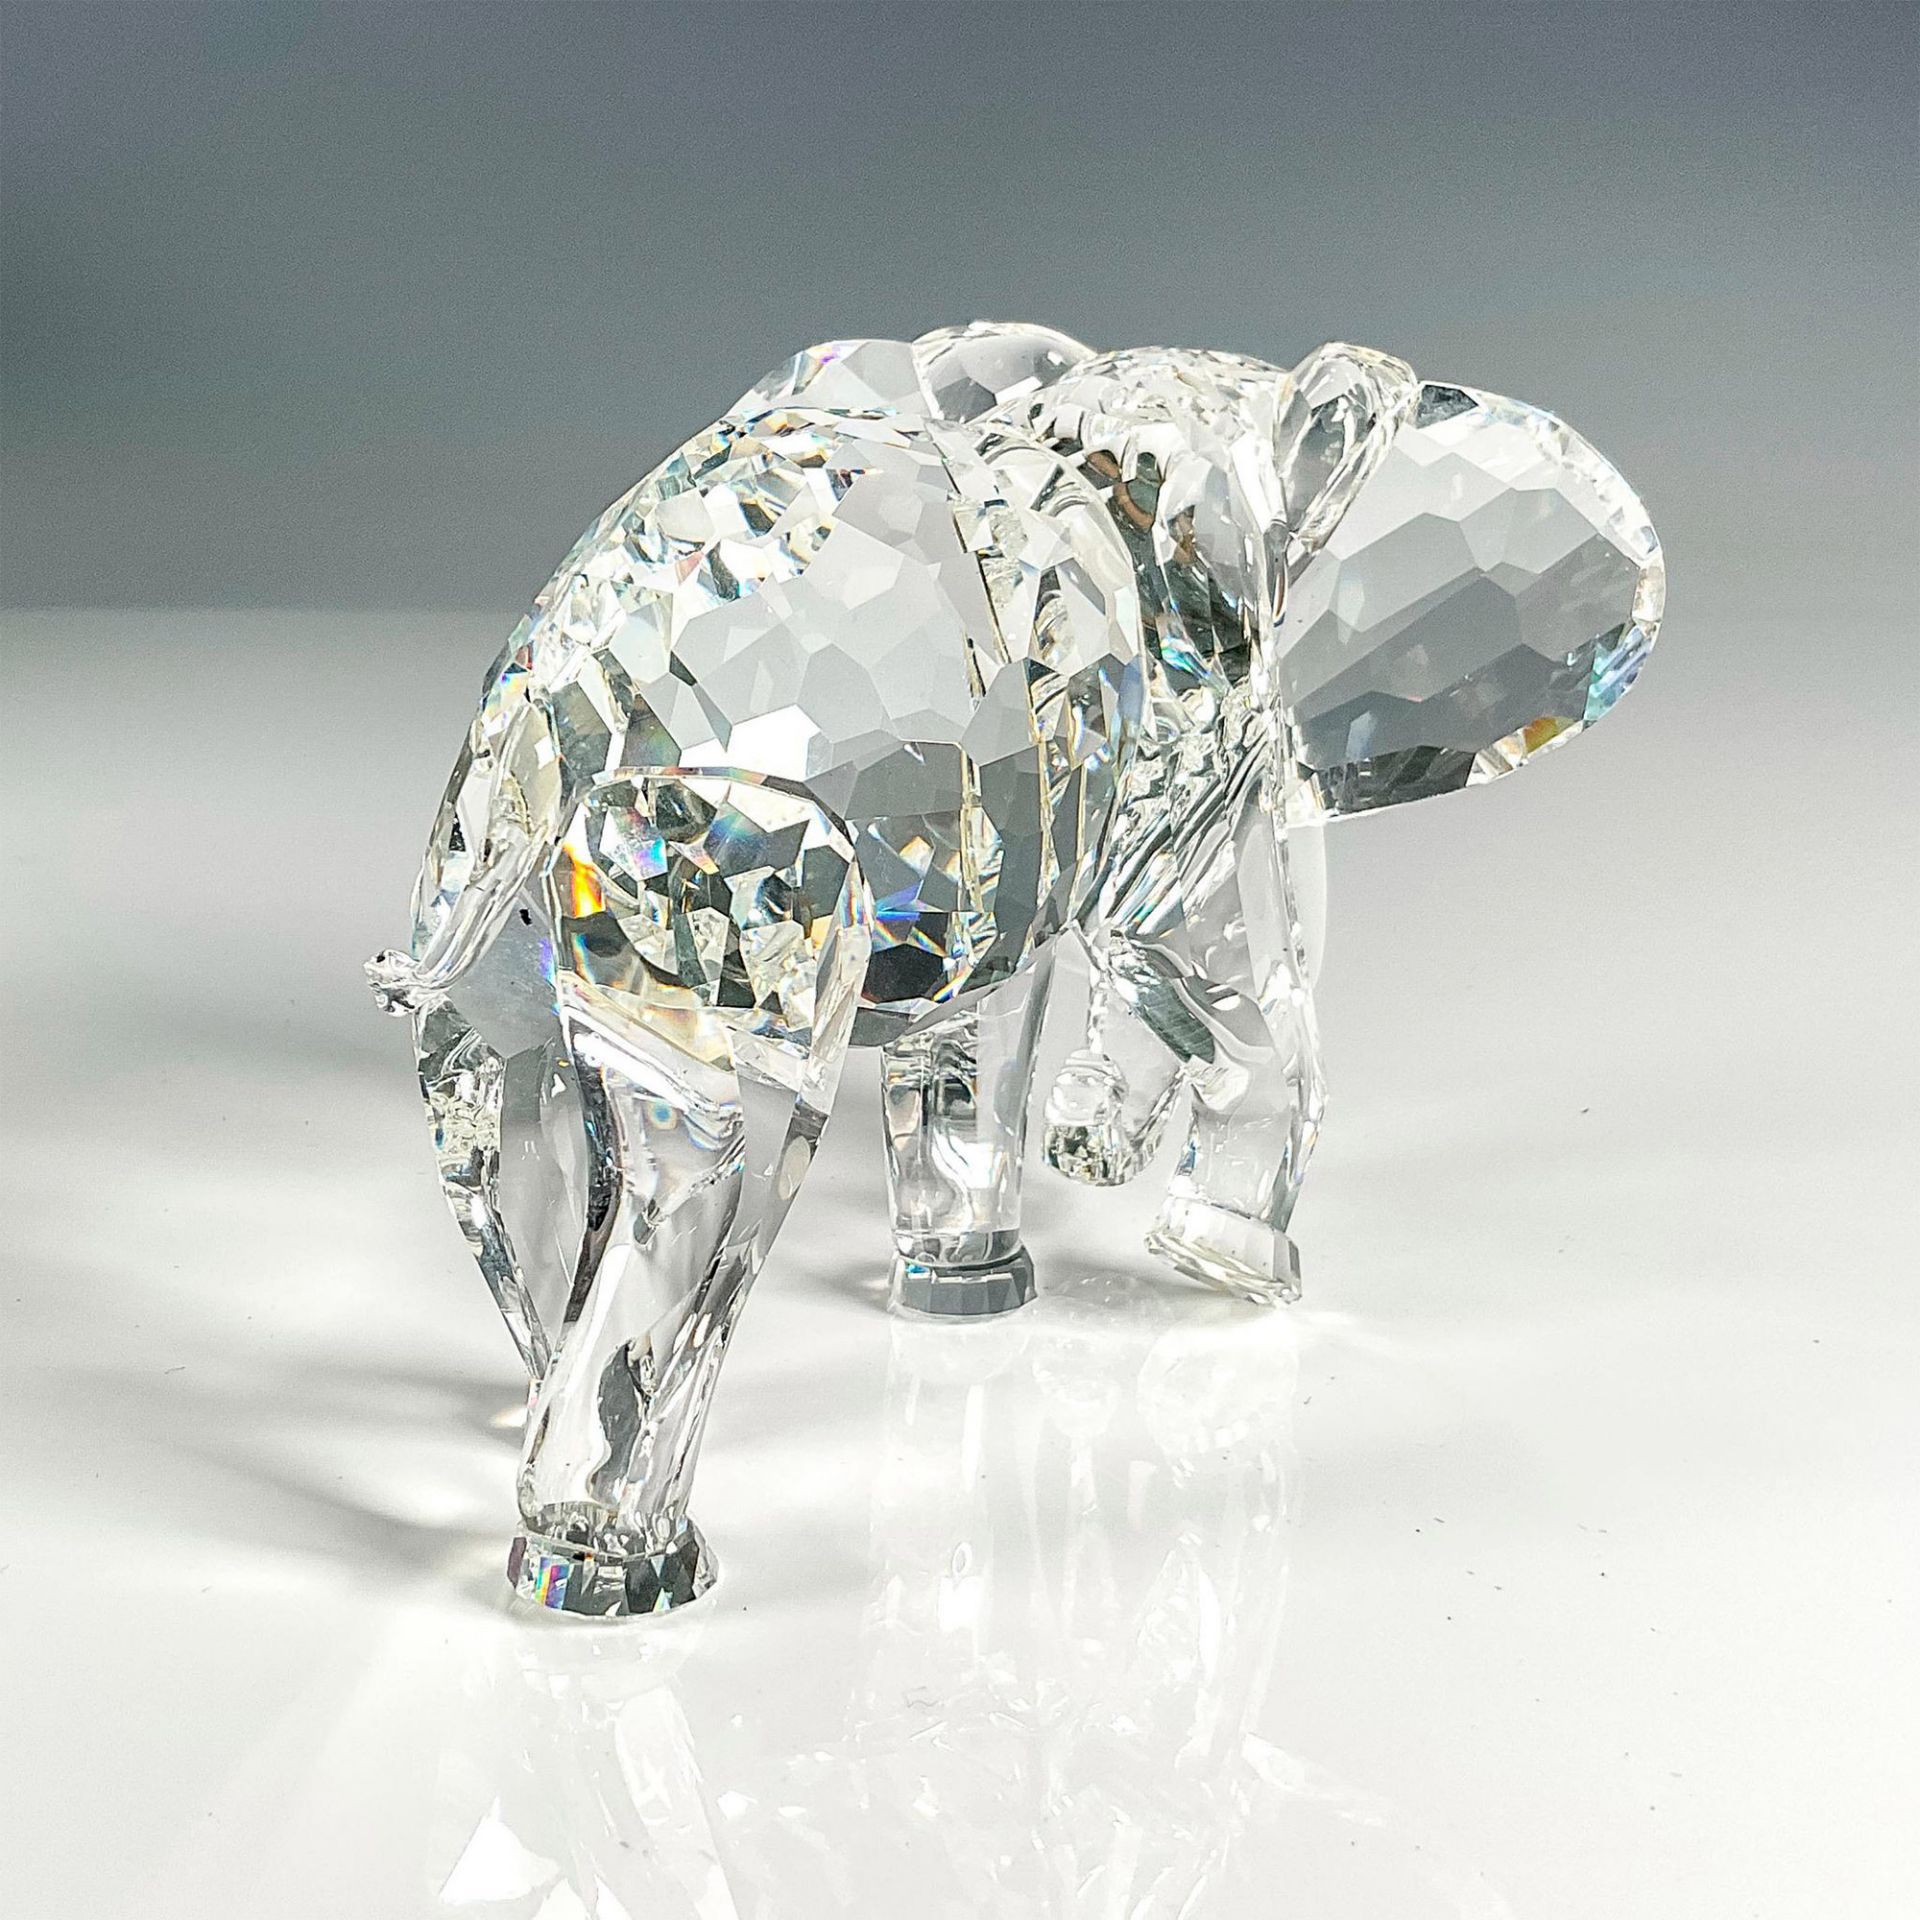 Swarovski Silver Crystal Figurine, 1993 Inspiration Africa - Image 2 of 4